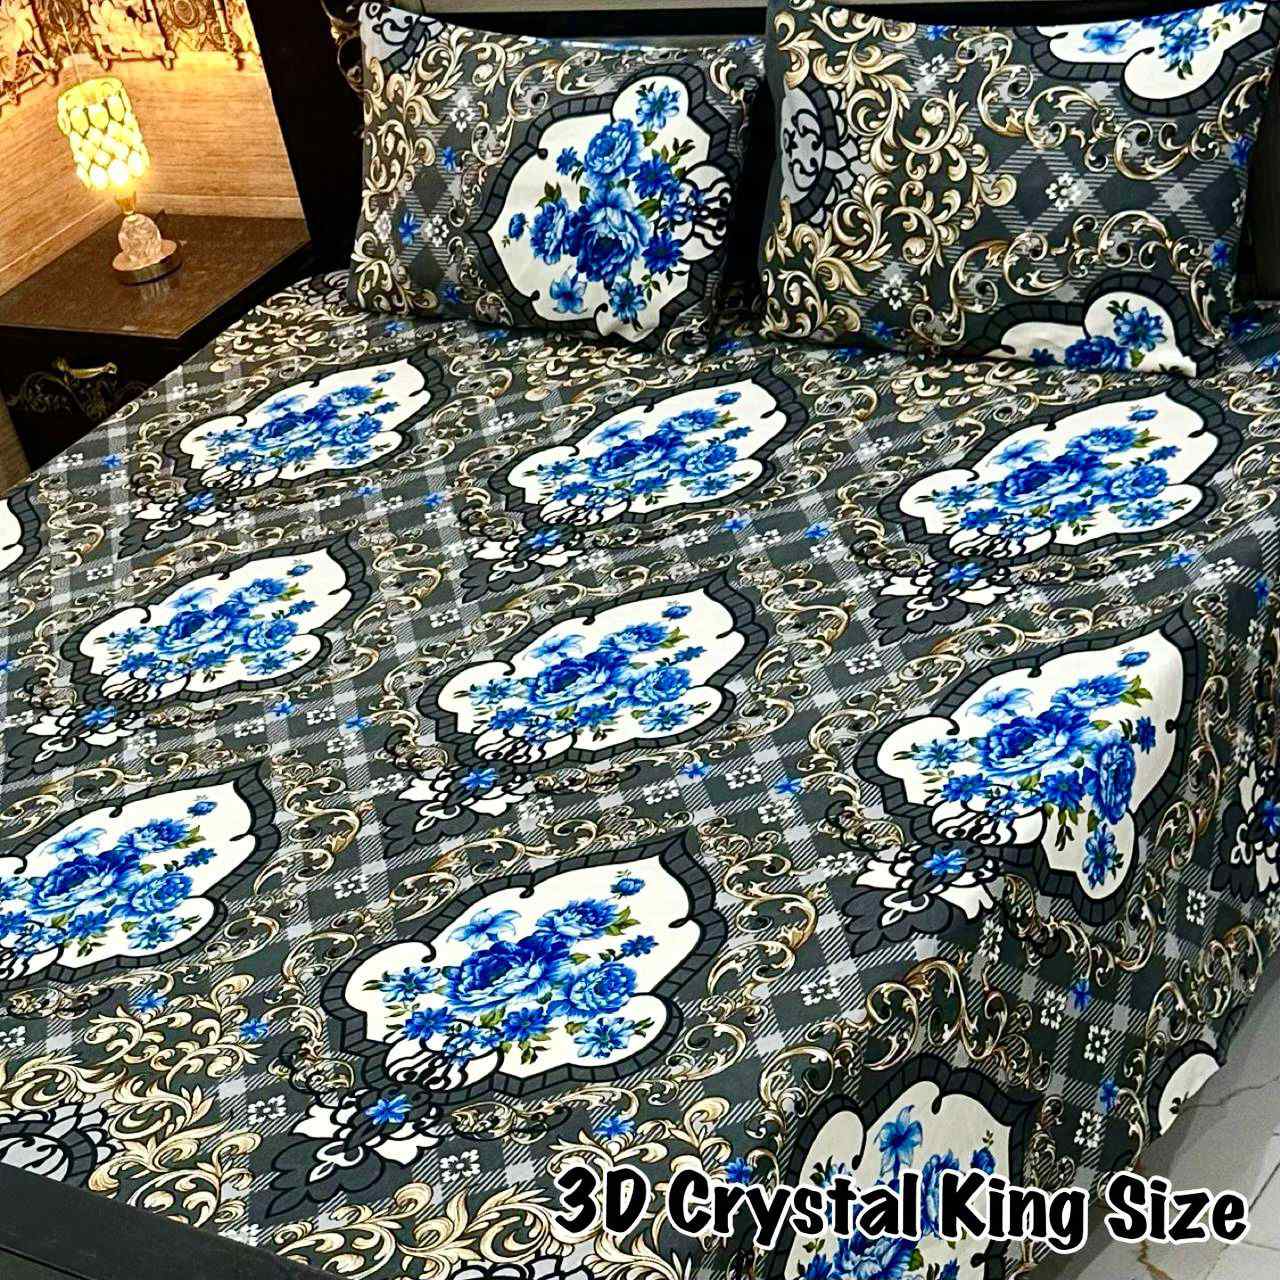 DF-CBSKS-12: DFY Bedding 3D Crystal Bed Sheet King Size